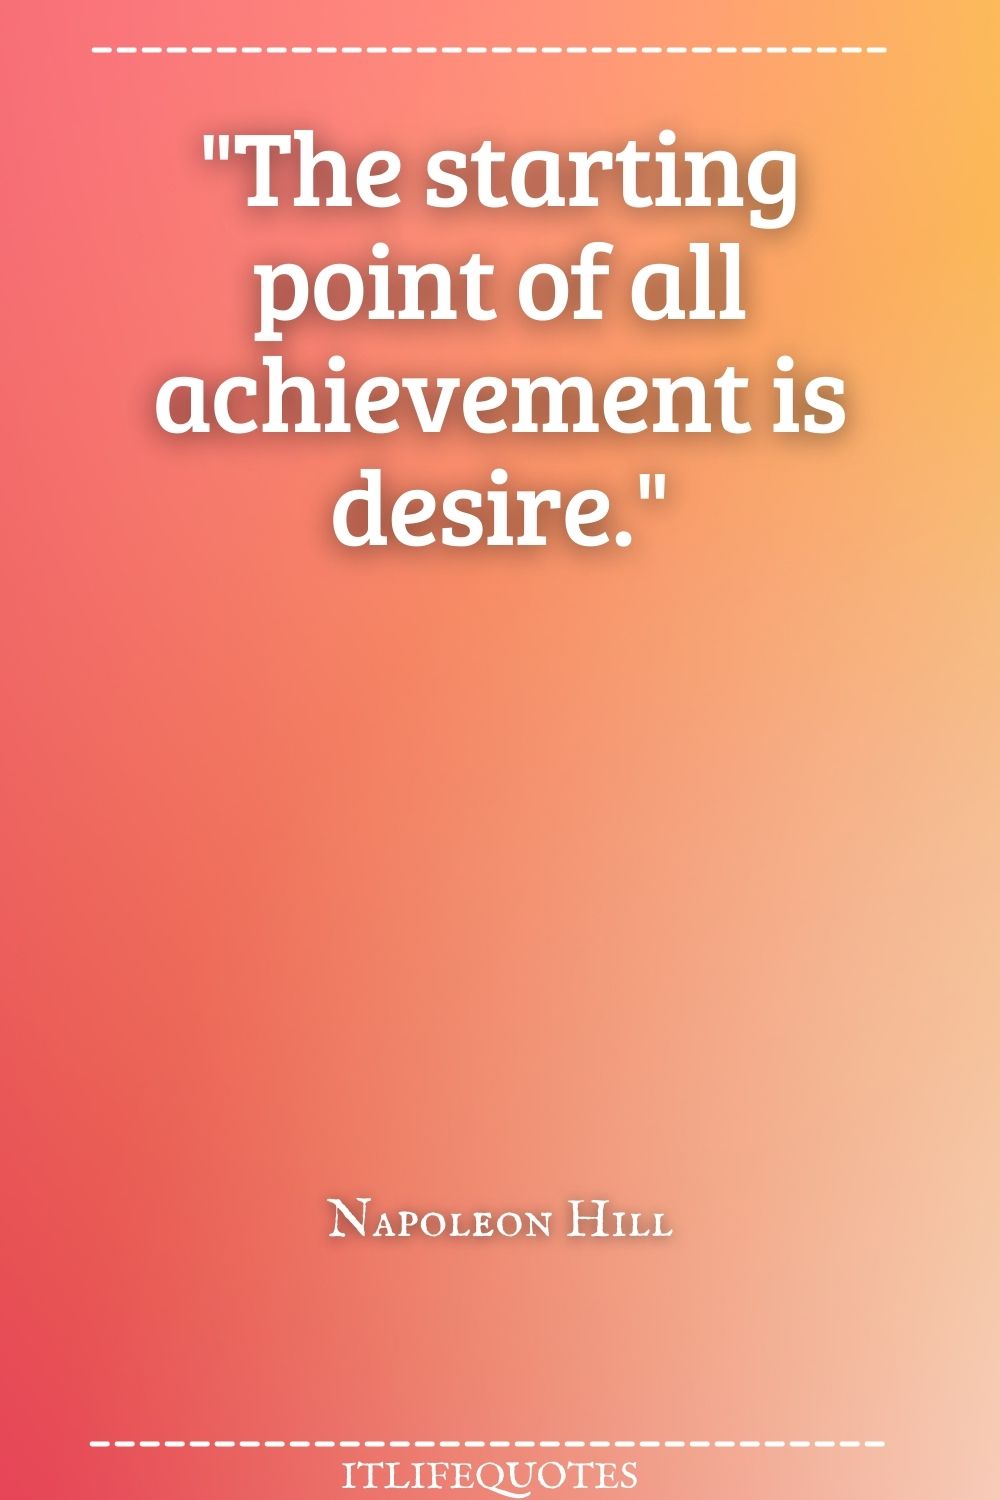 Napoleon Hill quotes